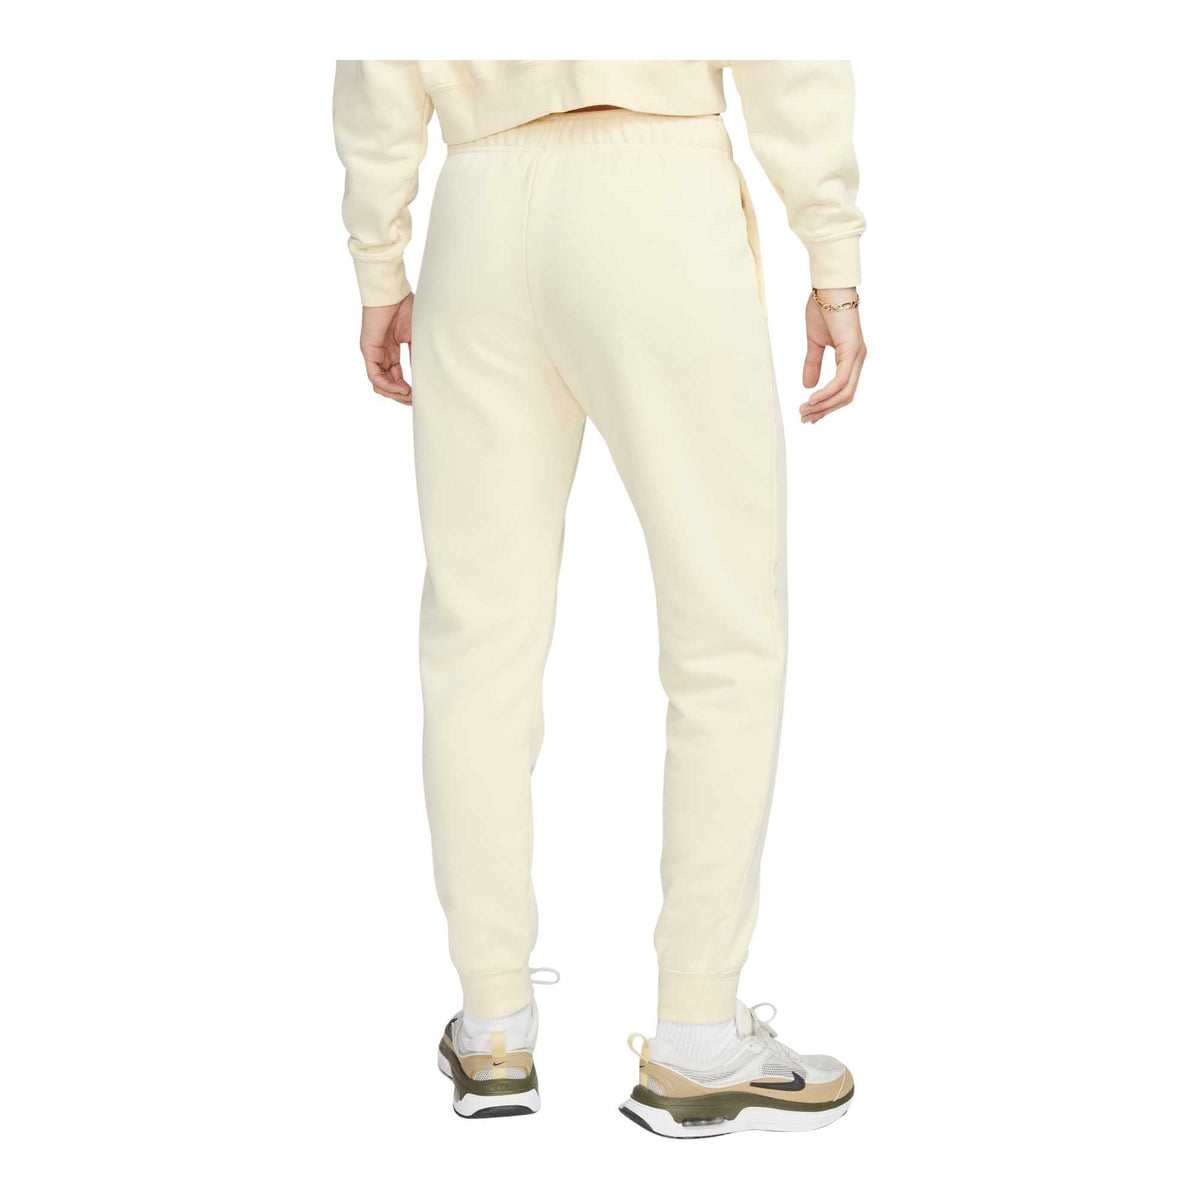 Nike Sportswear GYM VINTAGE EASY PANT - Tracksuit bottoms -  sesame/white/beige - Zalando.de